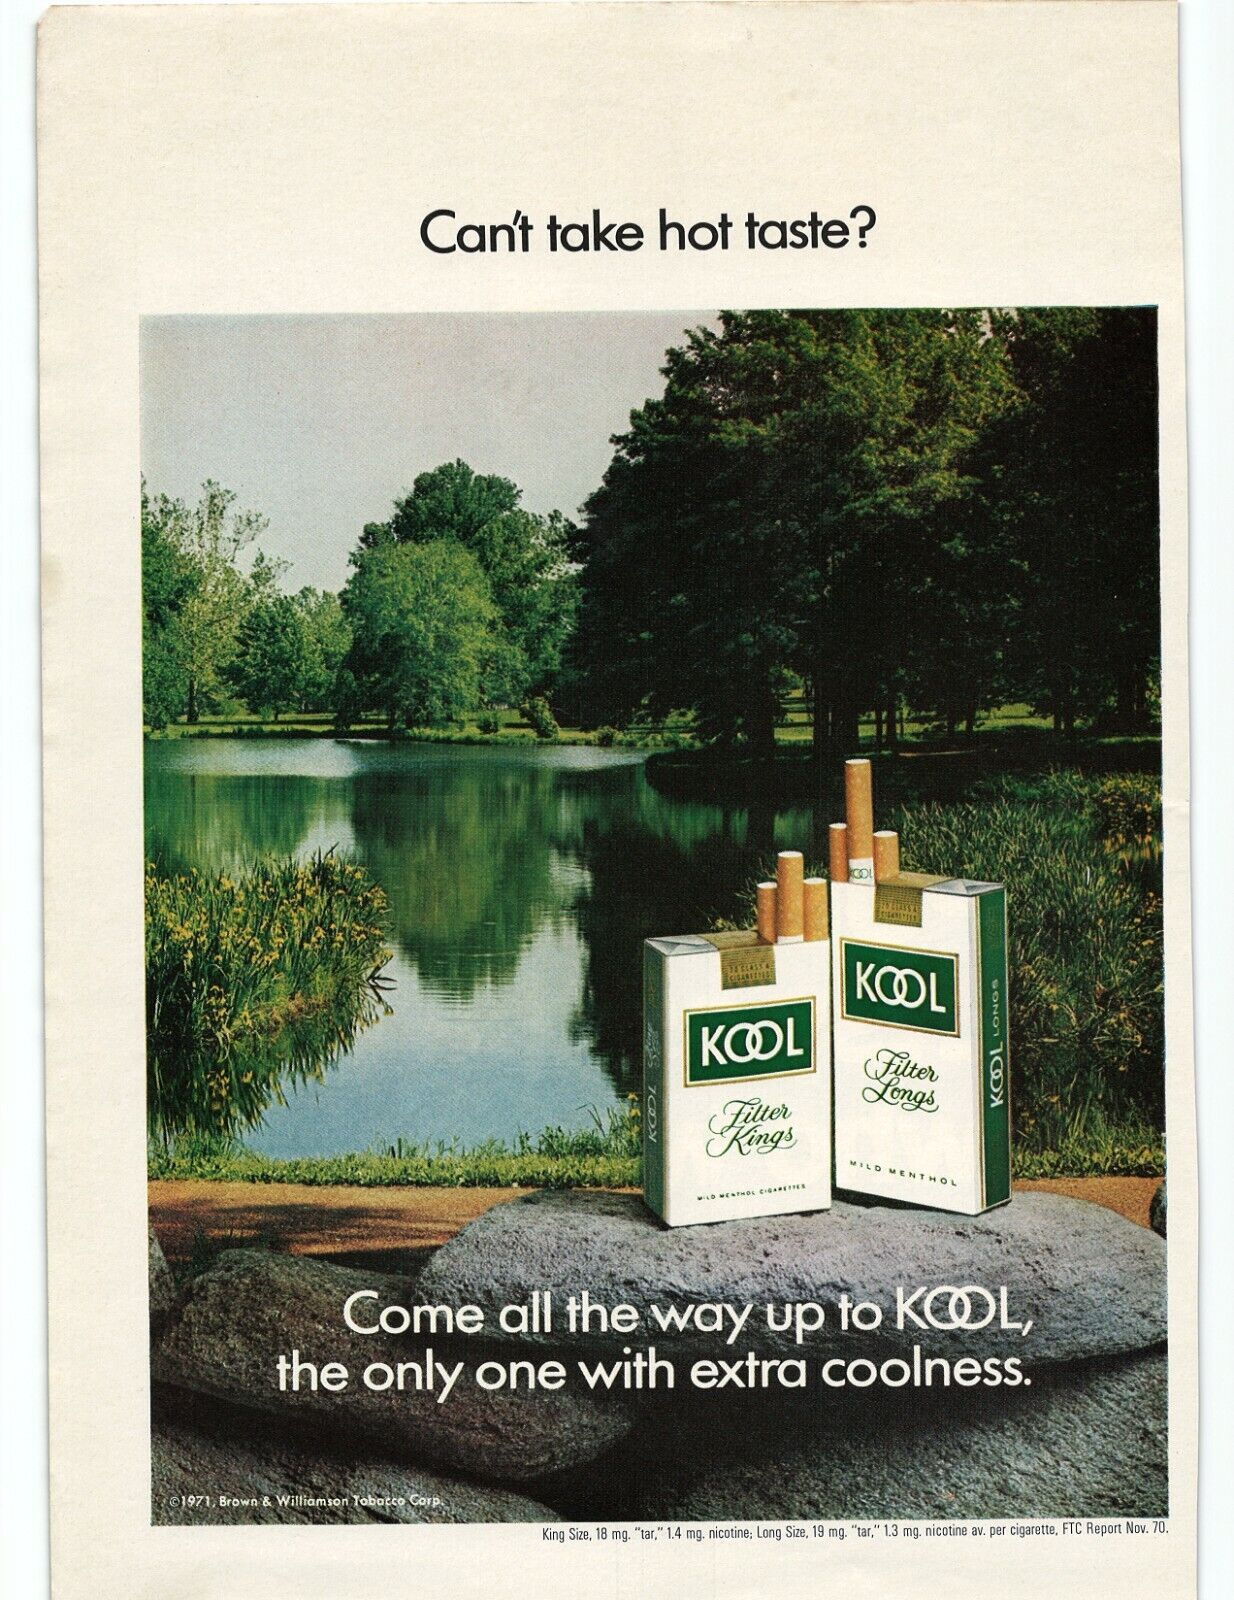 1971 Kool coolness cigarette print ad advertisement. CAN'T TAKE HOT TASTE?